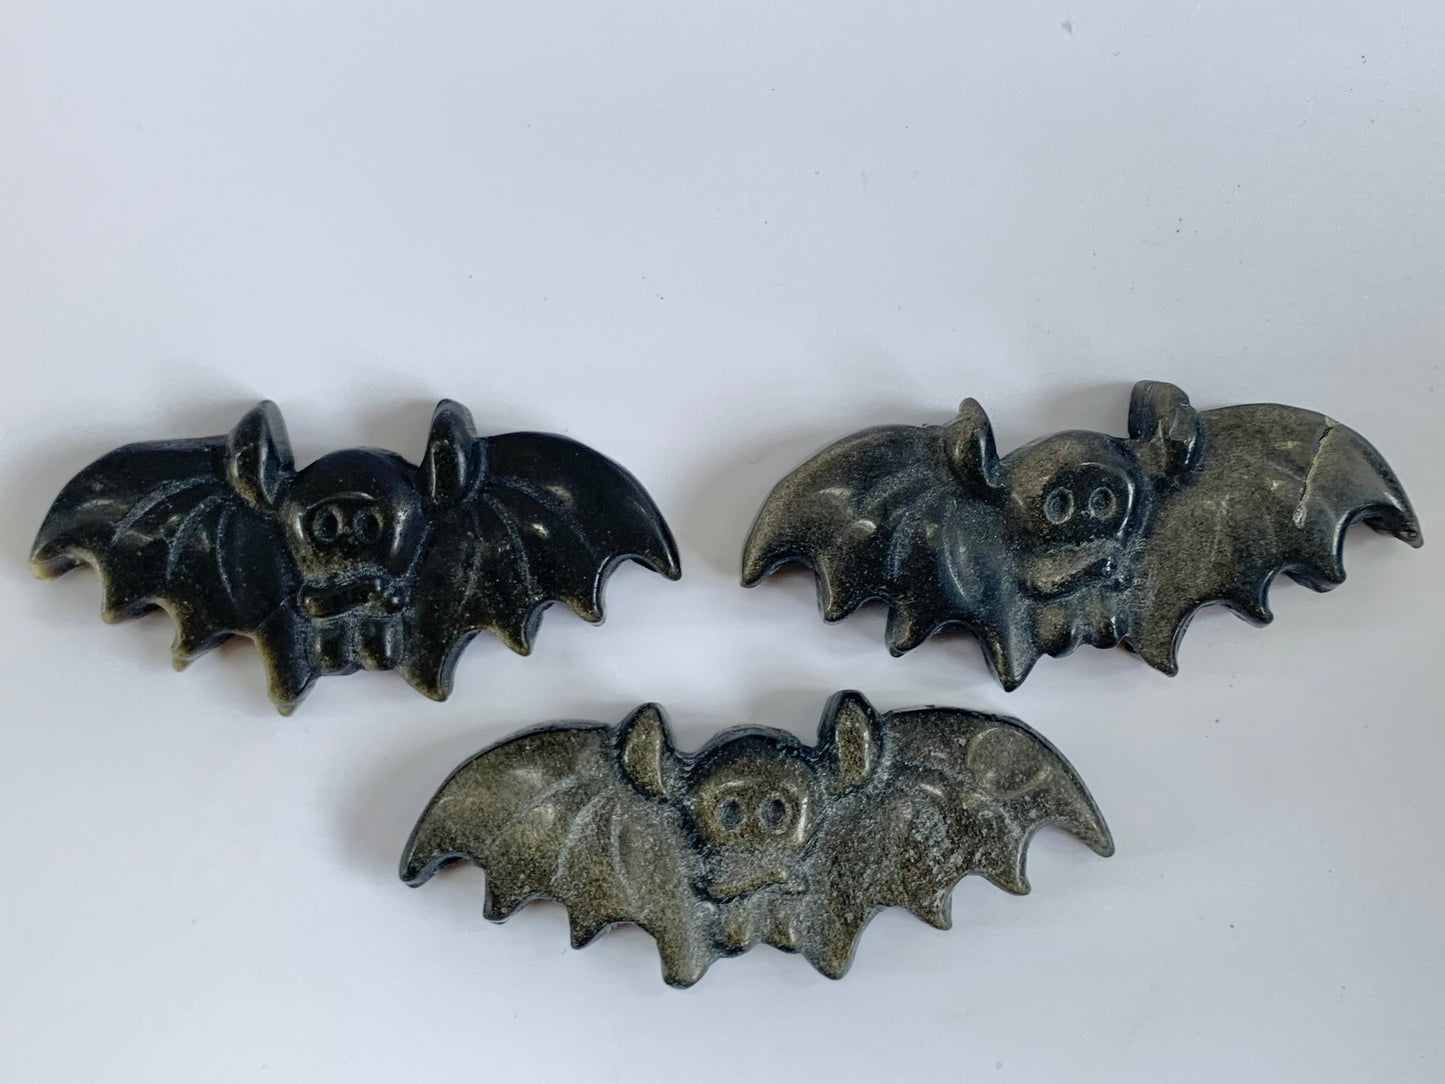 Silver Sheen Obsidian Bat Carving, flat